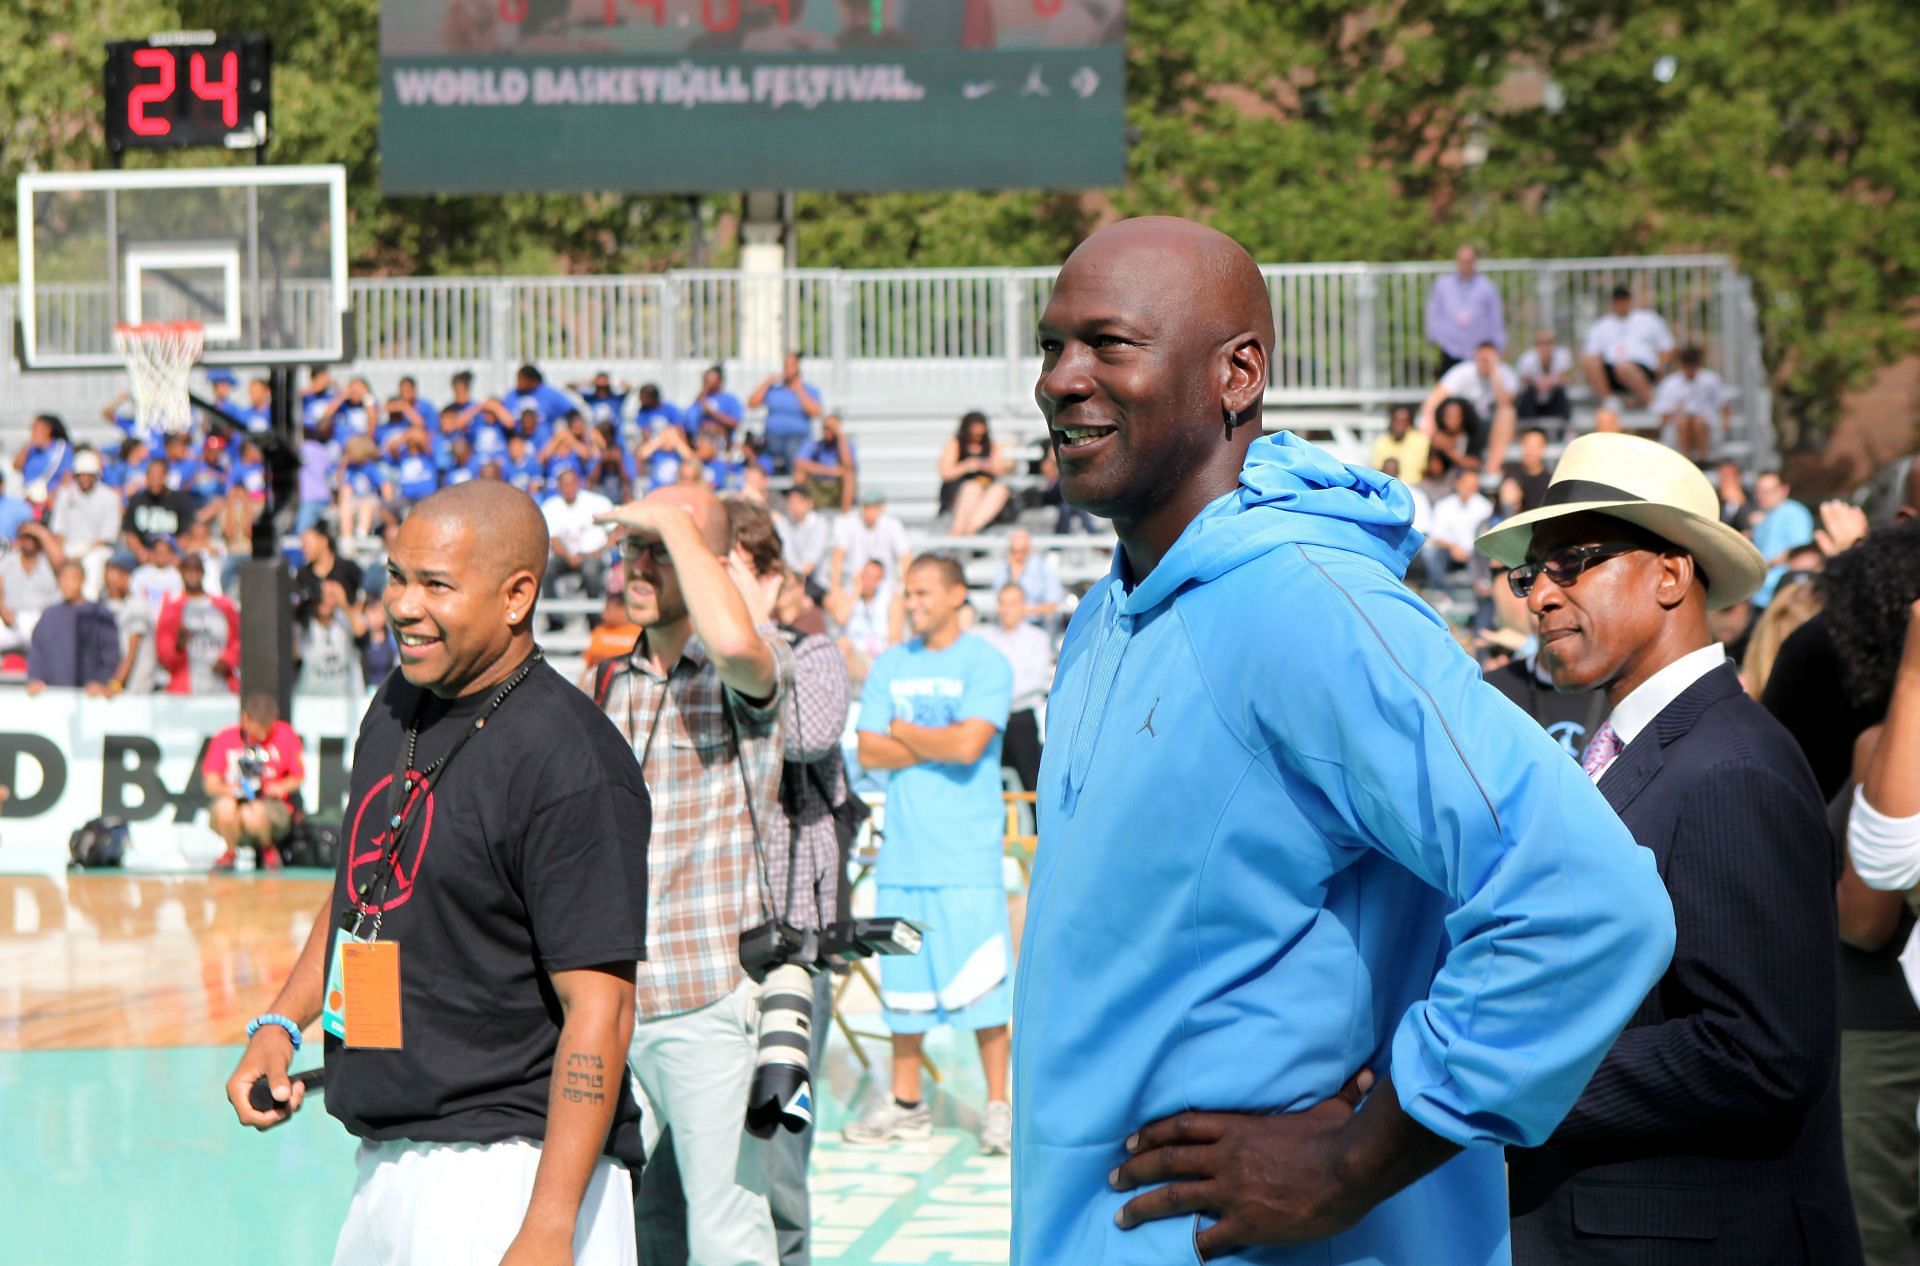 Michael Jordan at the World Basketball Festival